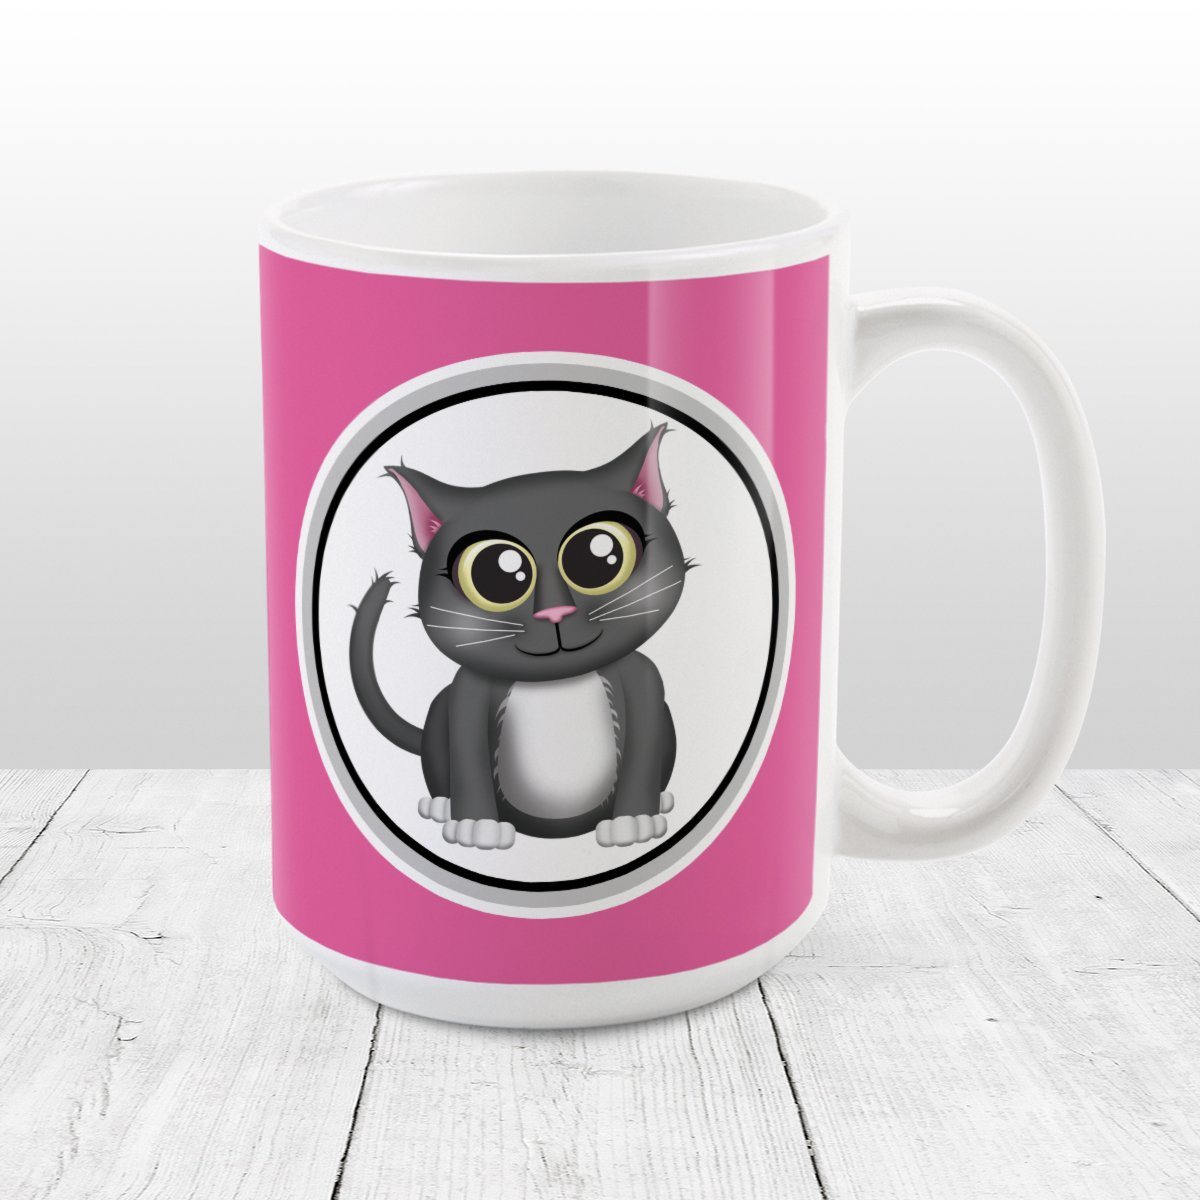 Cute Gray Cat - Fuchsia Pink Cat Mug at Amy's Coffee Mugs